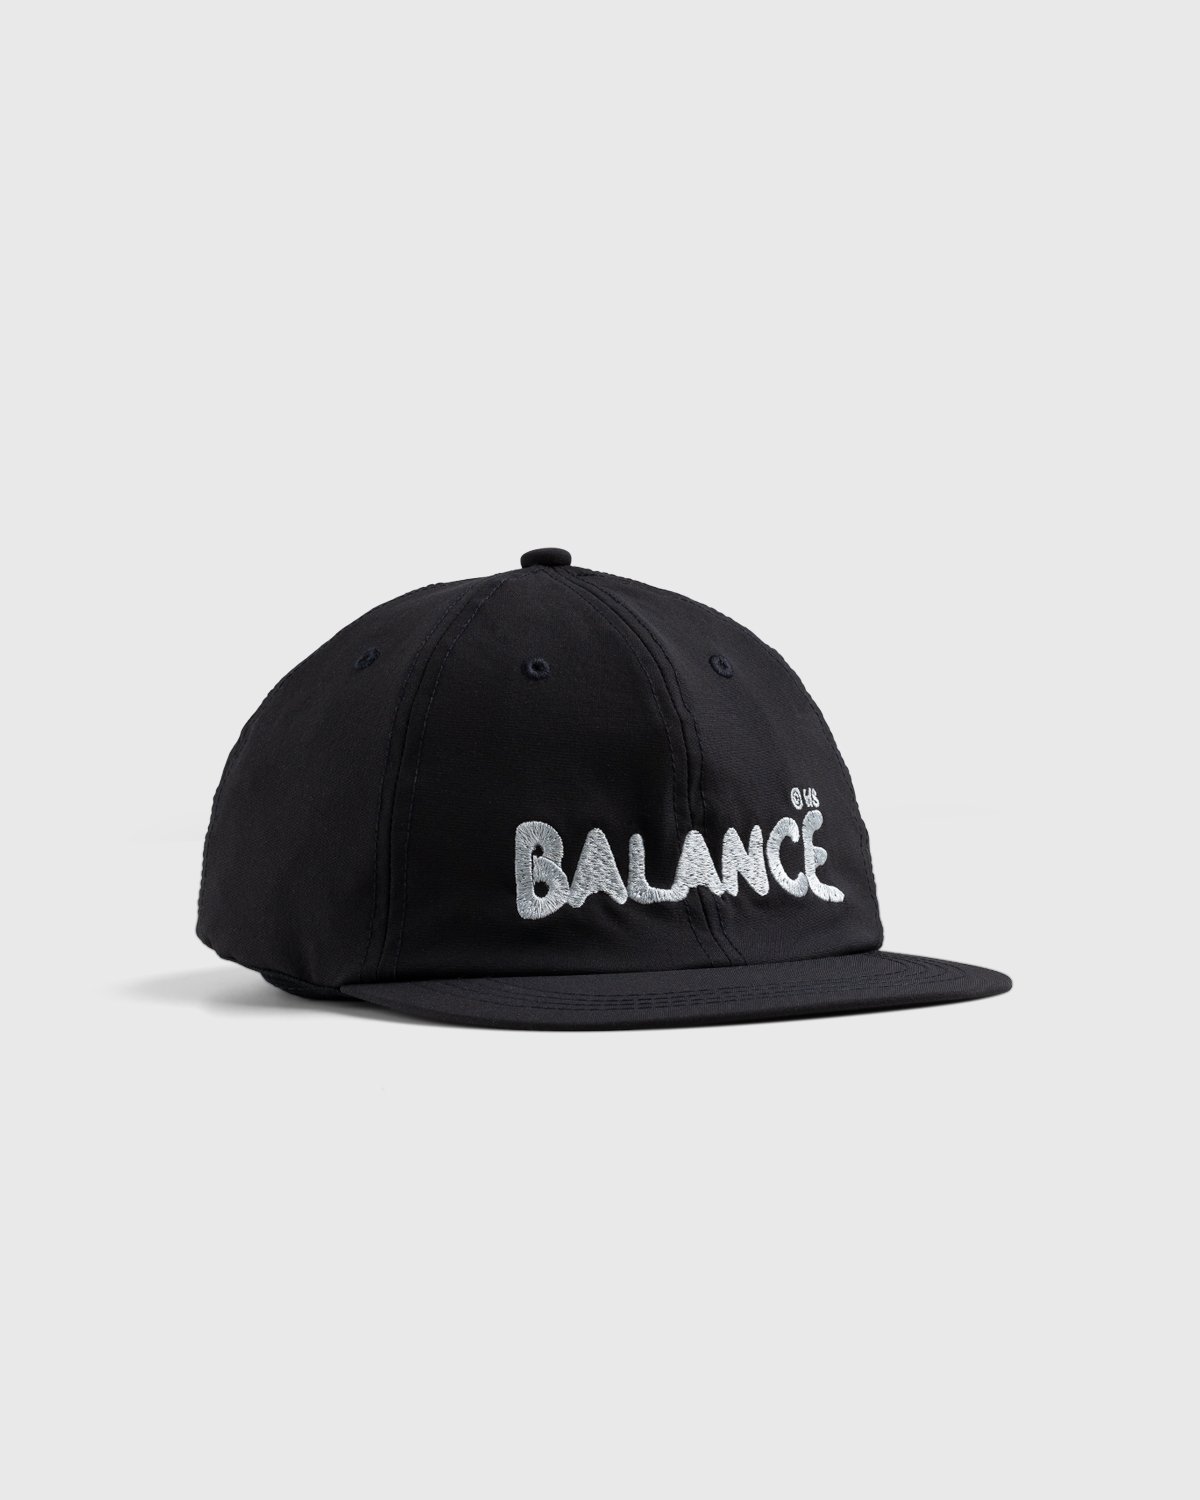 Satisfy x Highsnobiety - HS Sports Balance Running Cap Black - Accessories - Black - Image 1